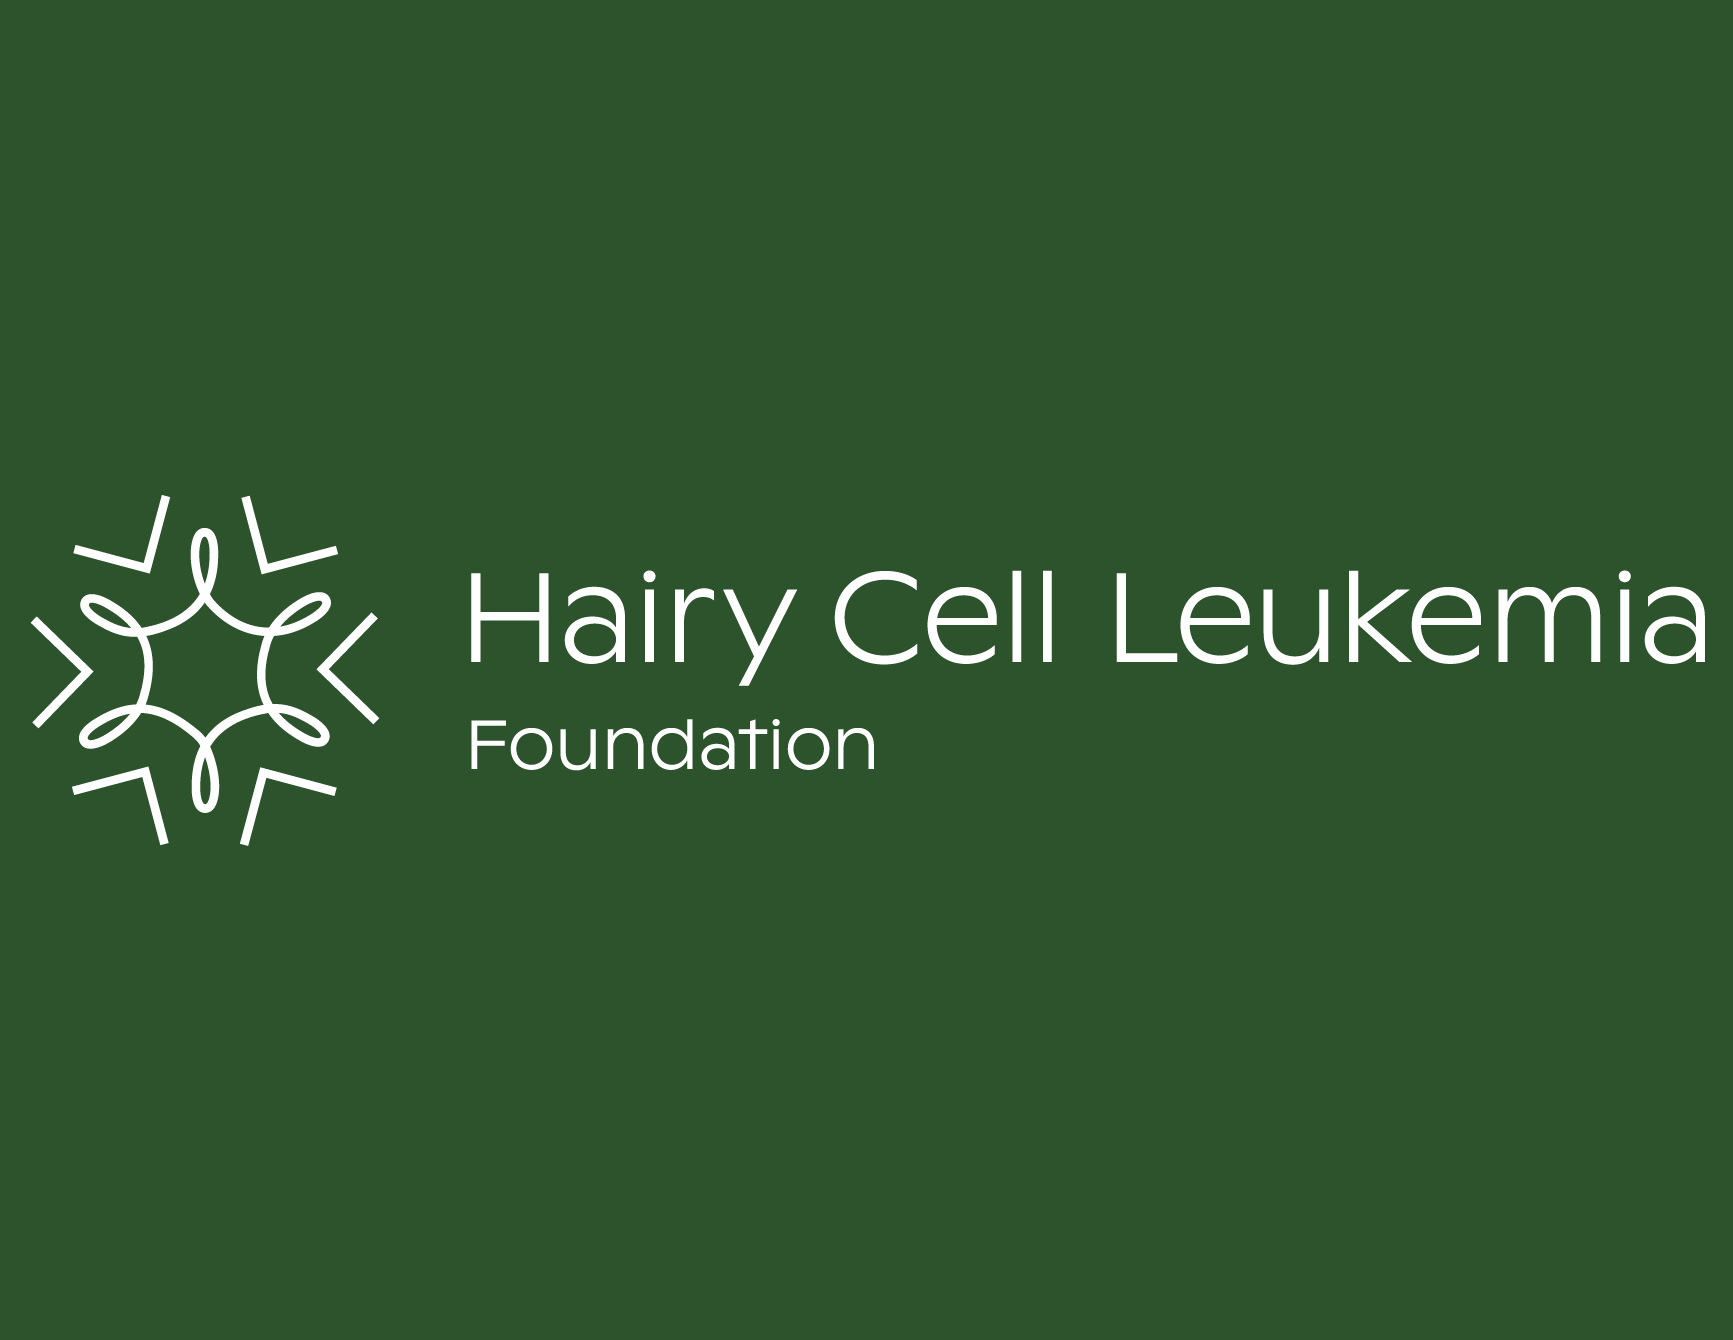 Hairy Cell Leukemia Foundation logo